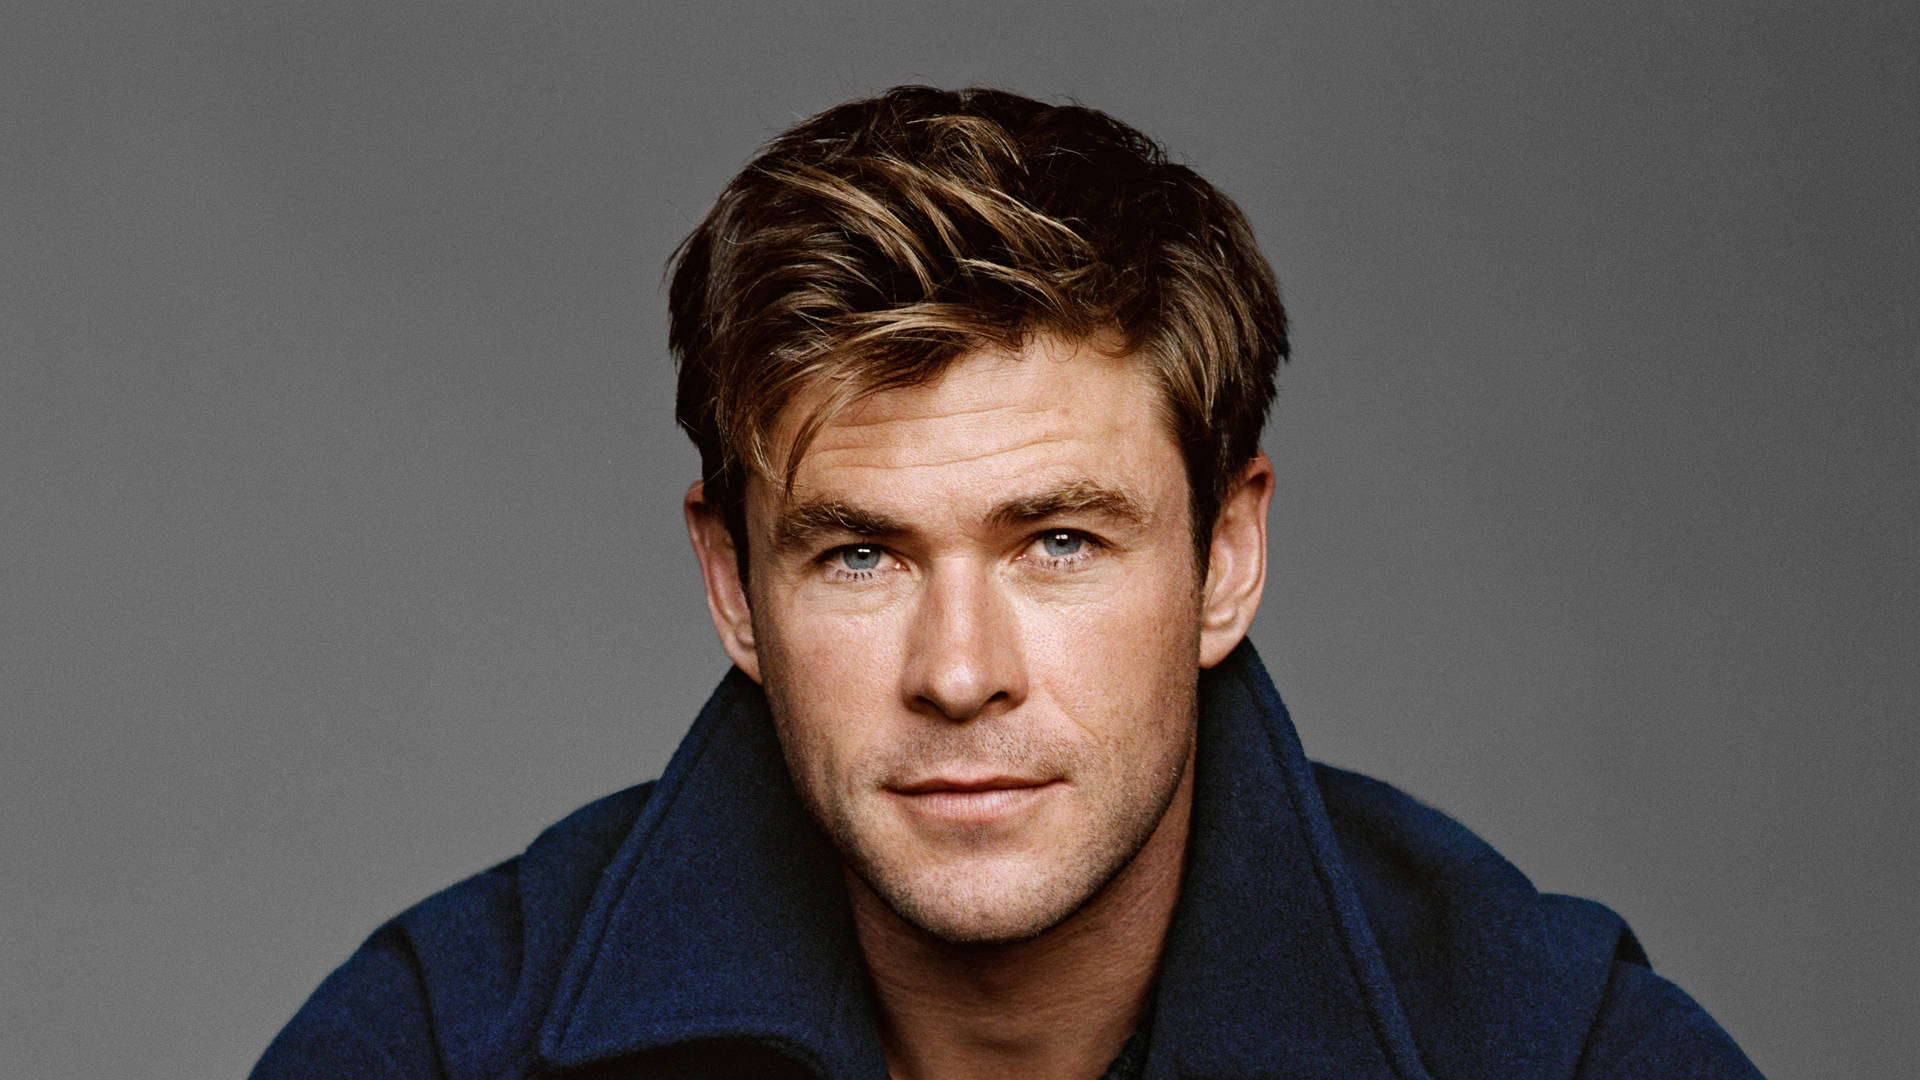 Chris Hemsworth In Blue Jacket Background